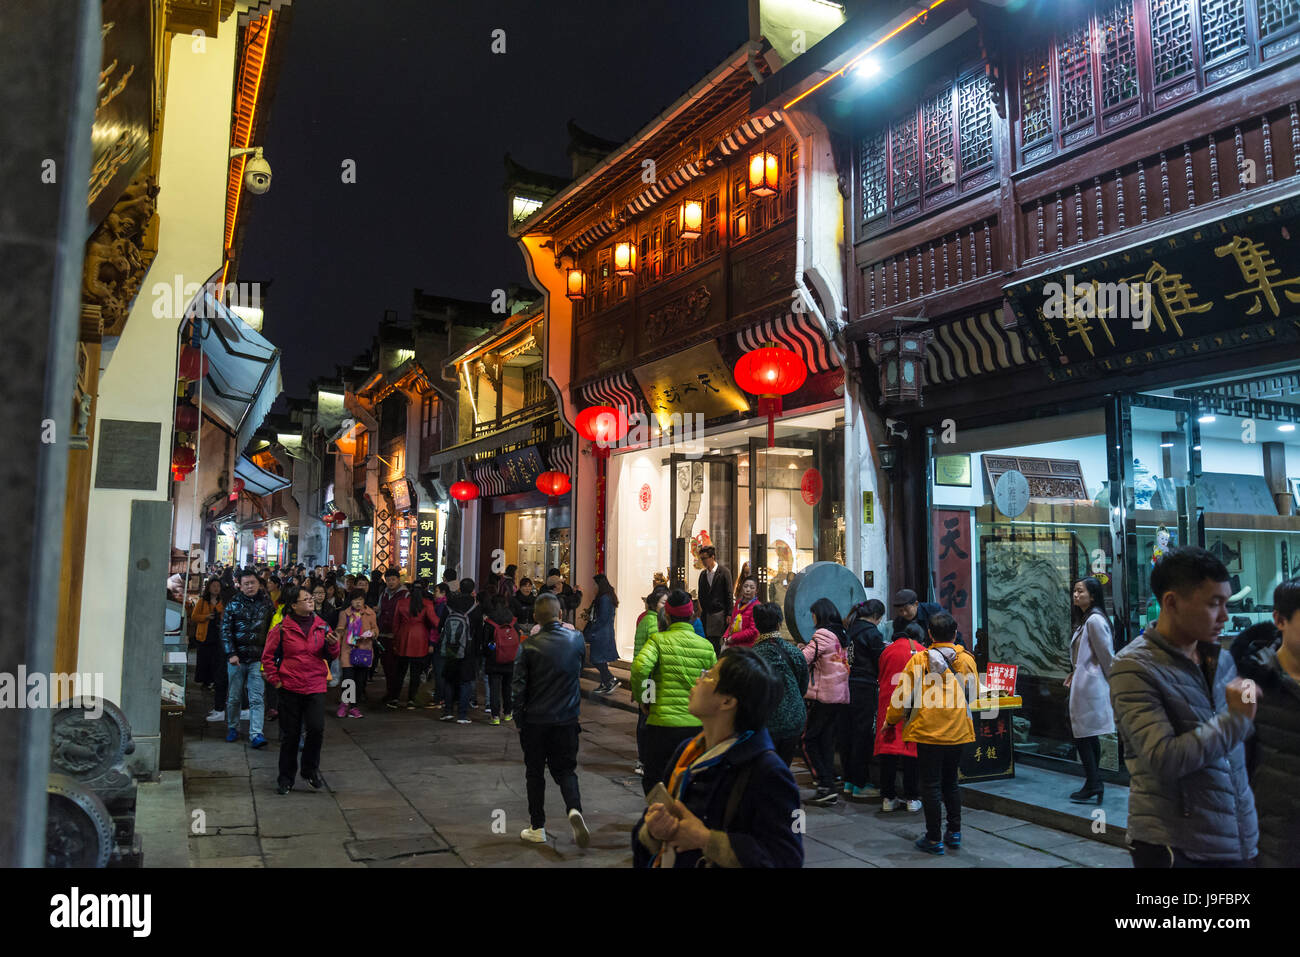 Tunxi Old Street, traditional shopping hub, Huangshan, Anhui province, China Stock Photo